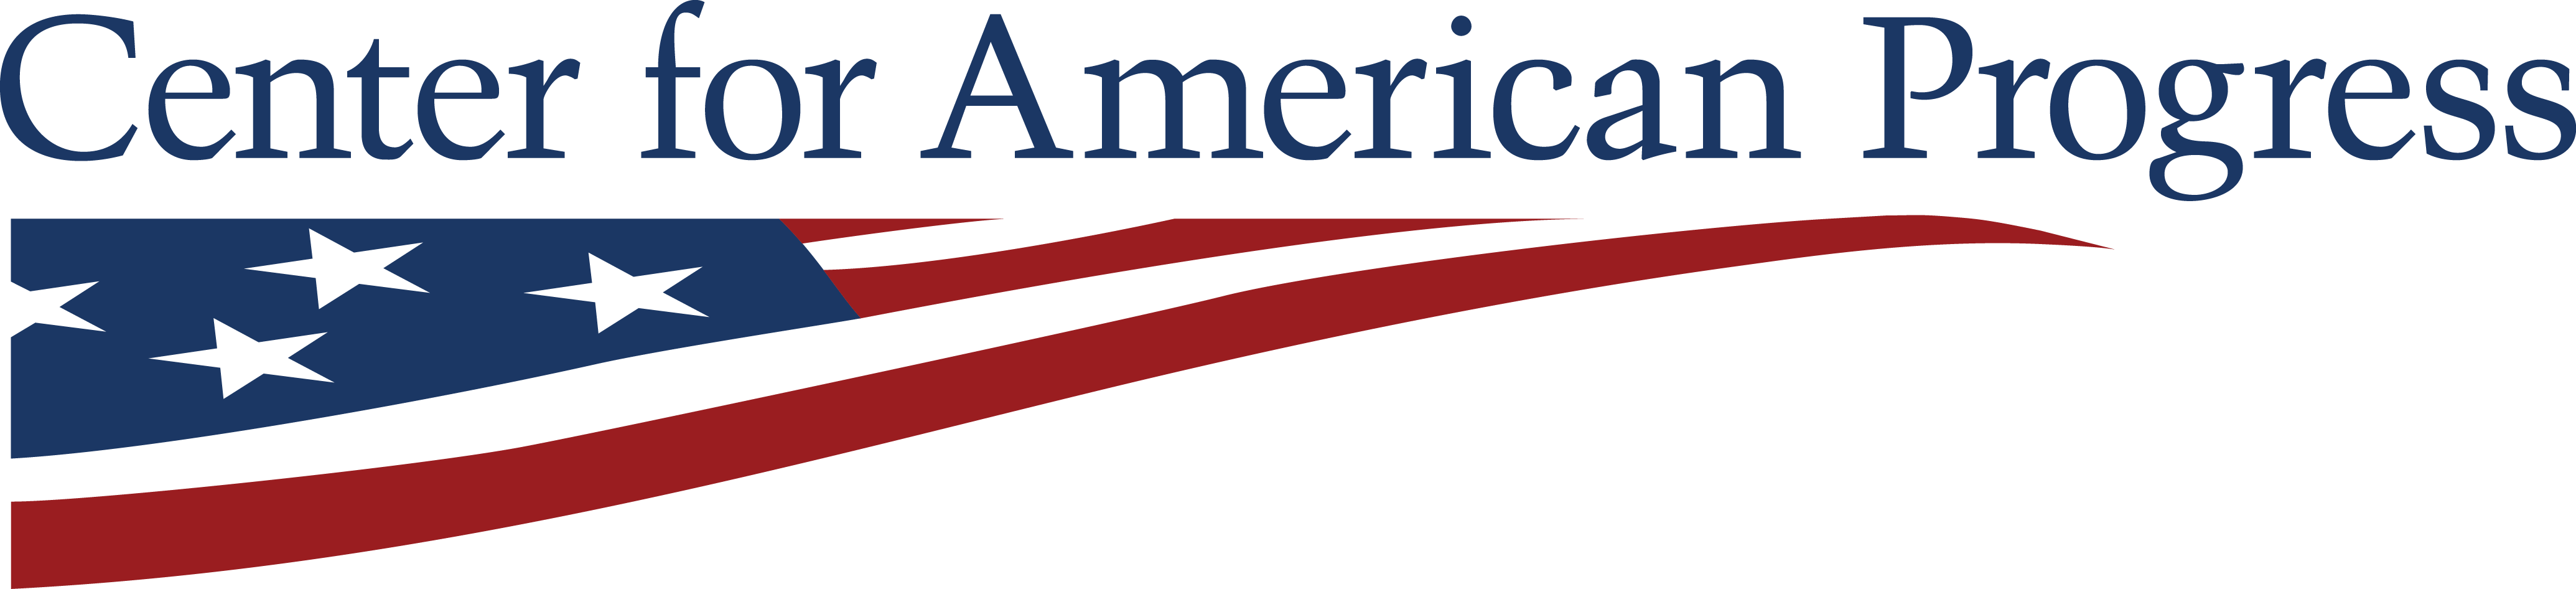 American Logo - American Progress Logos - Center for American Progress